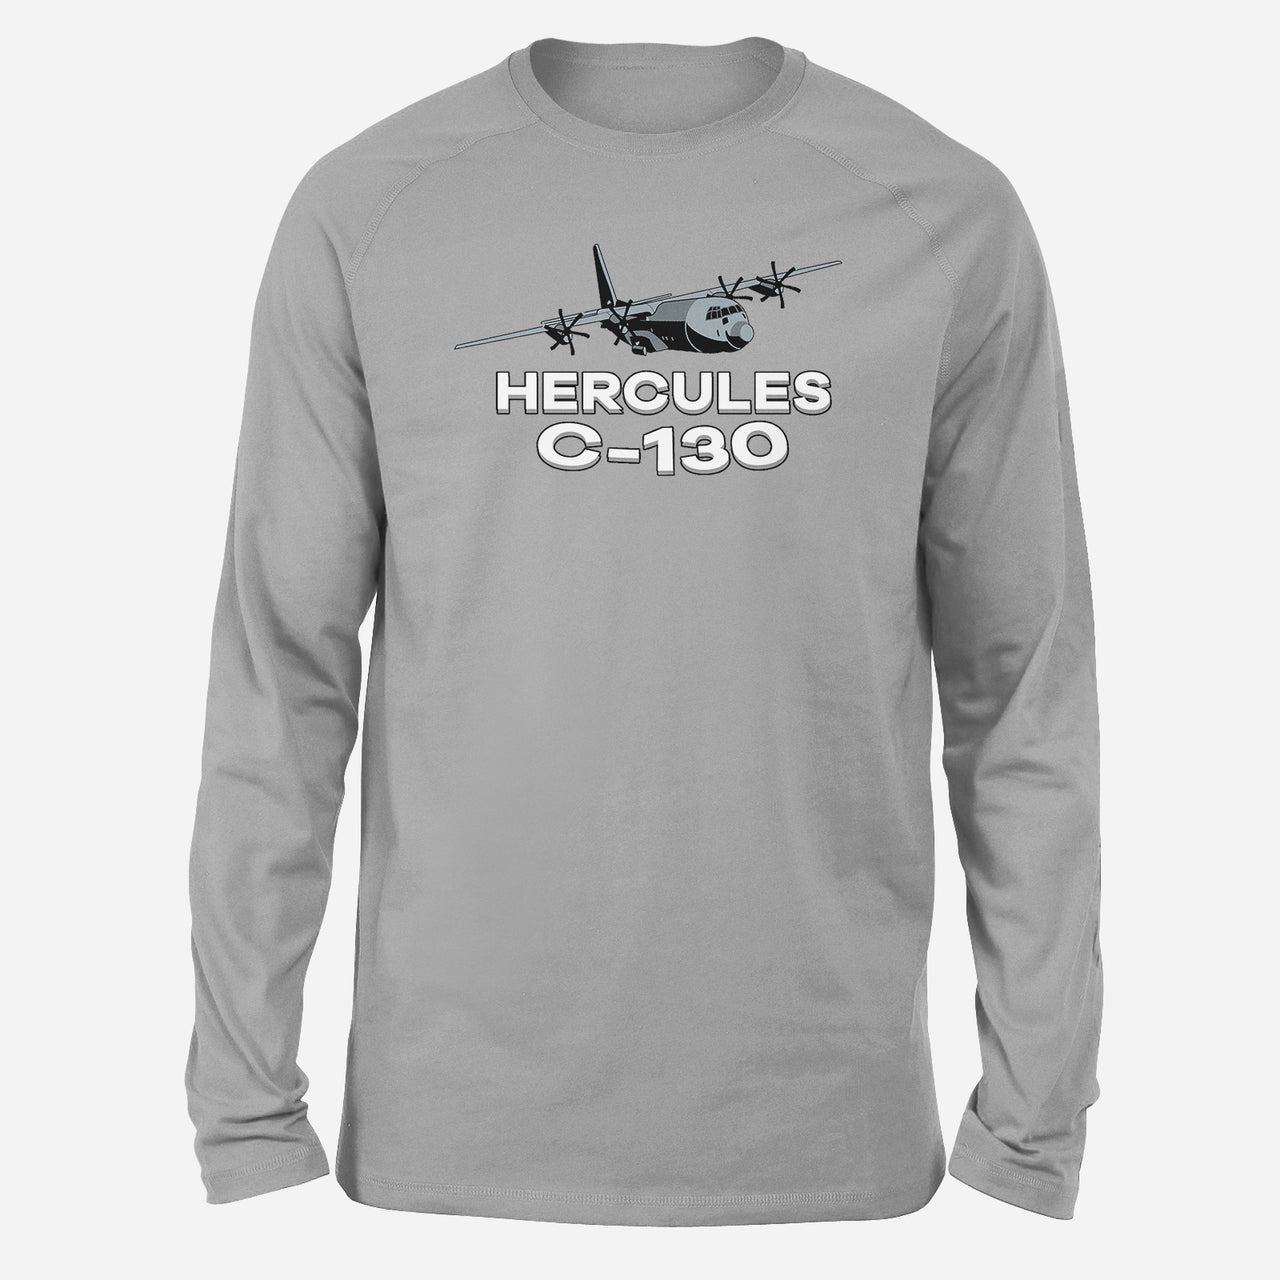 The Hercules C130 Designed Long-Sleeve T-Shirts